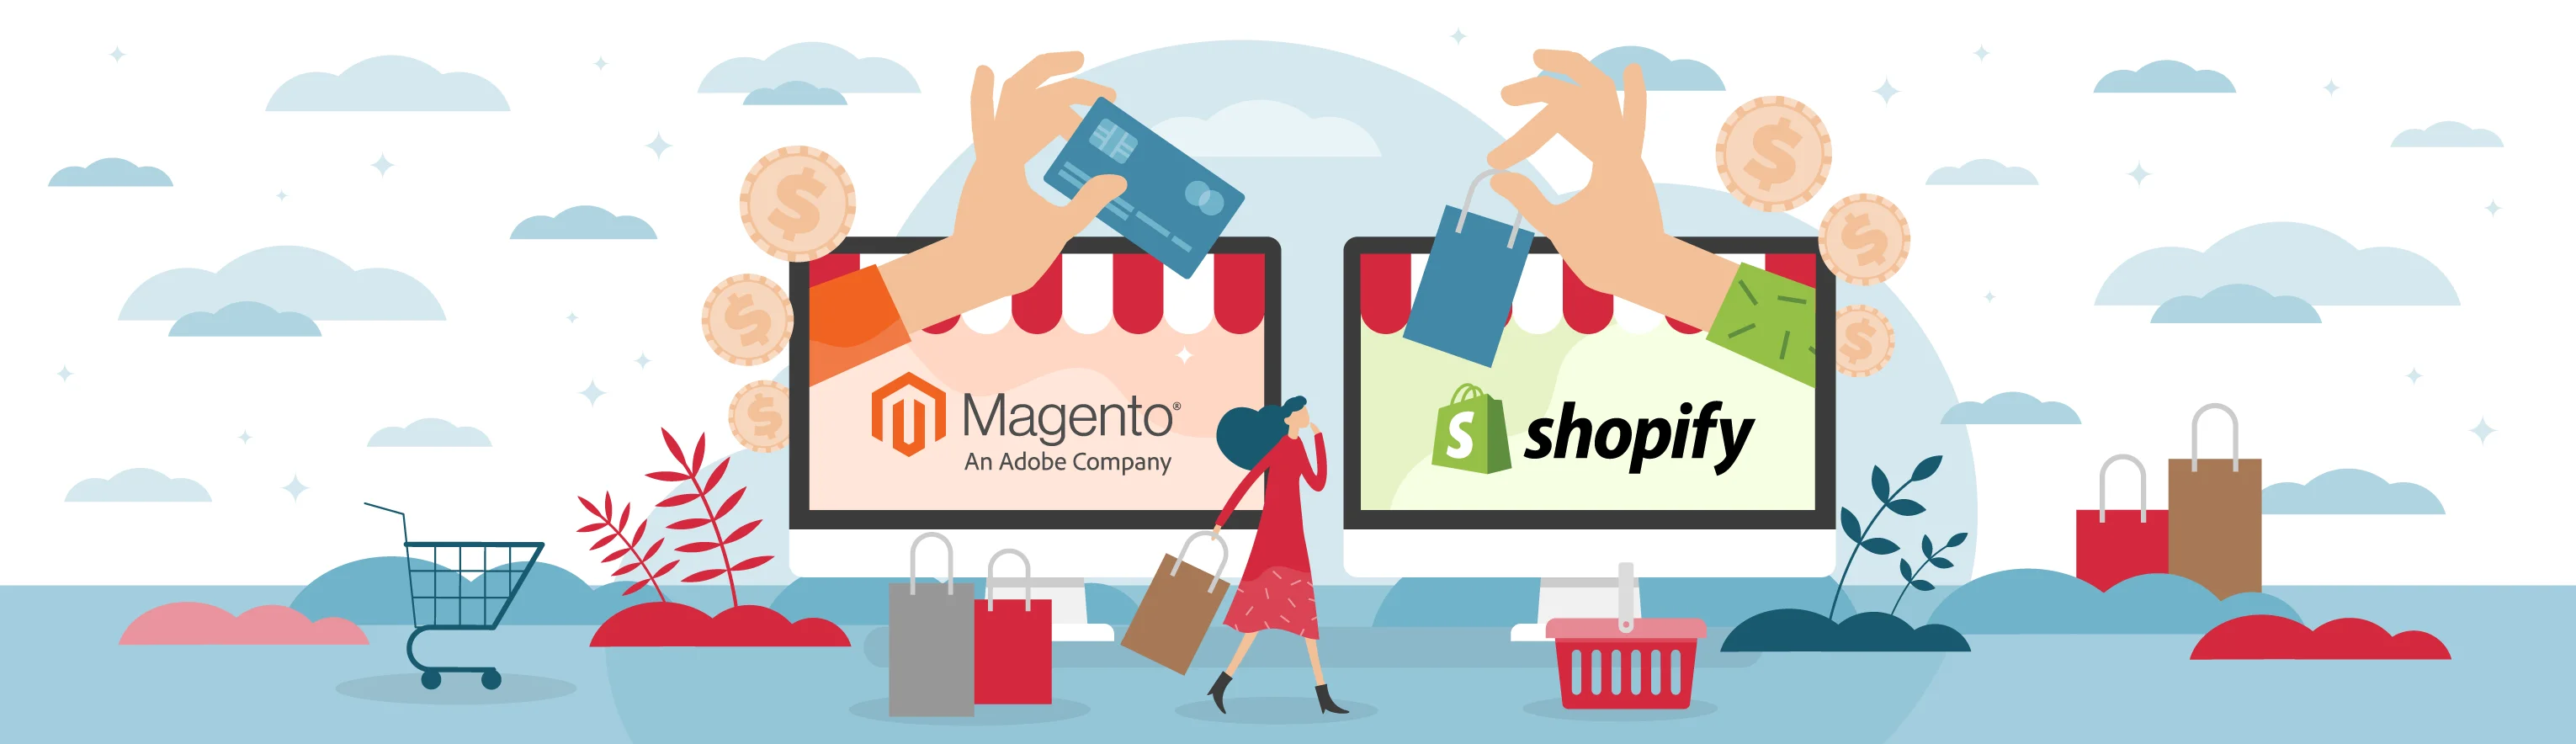 Shopify vs. Magento เลือกแพลตฟอร์มอีคอมเมิร์ซที่เหมาะกับธุรกิจของคุณ